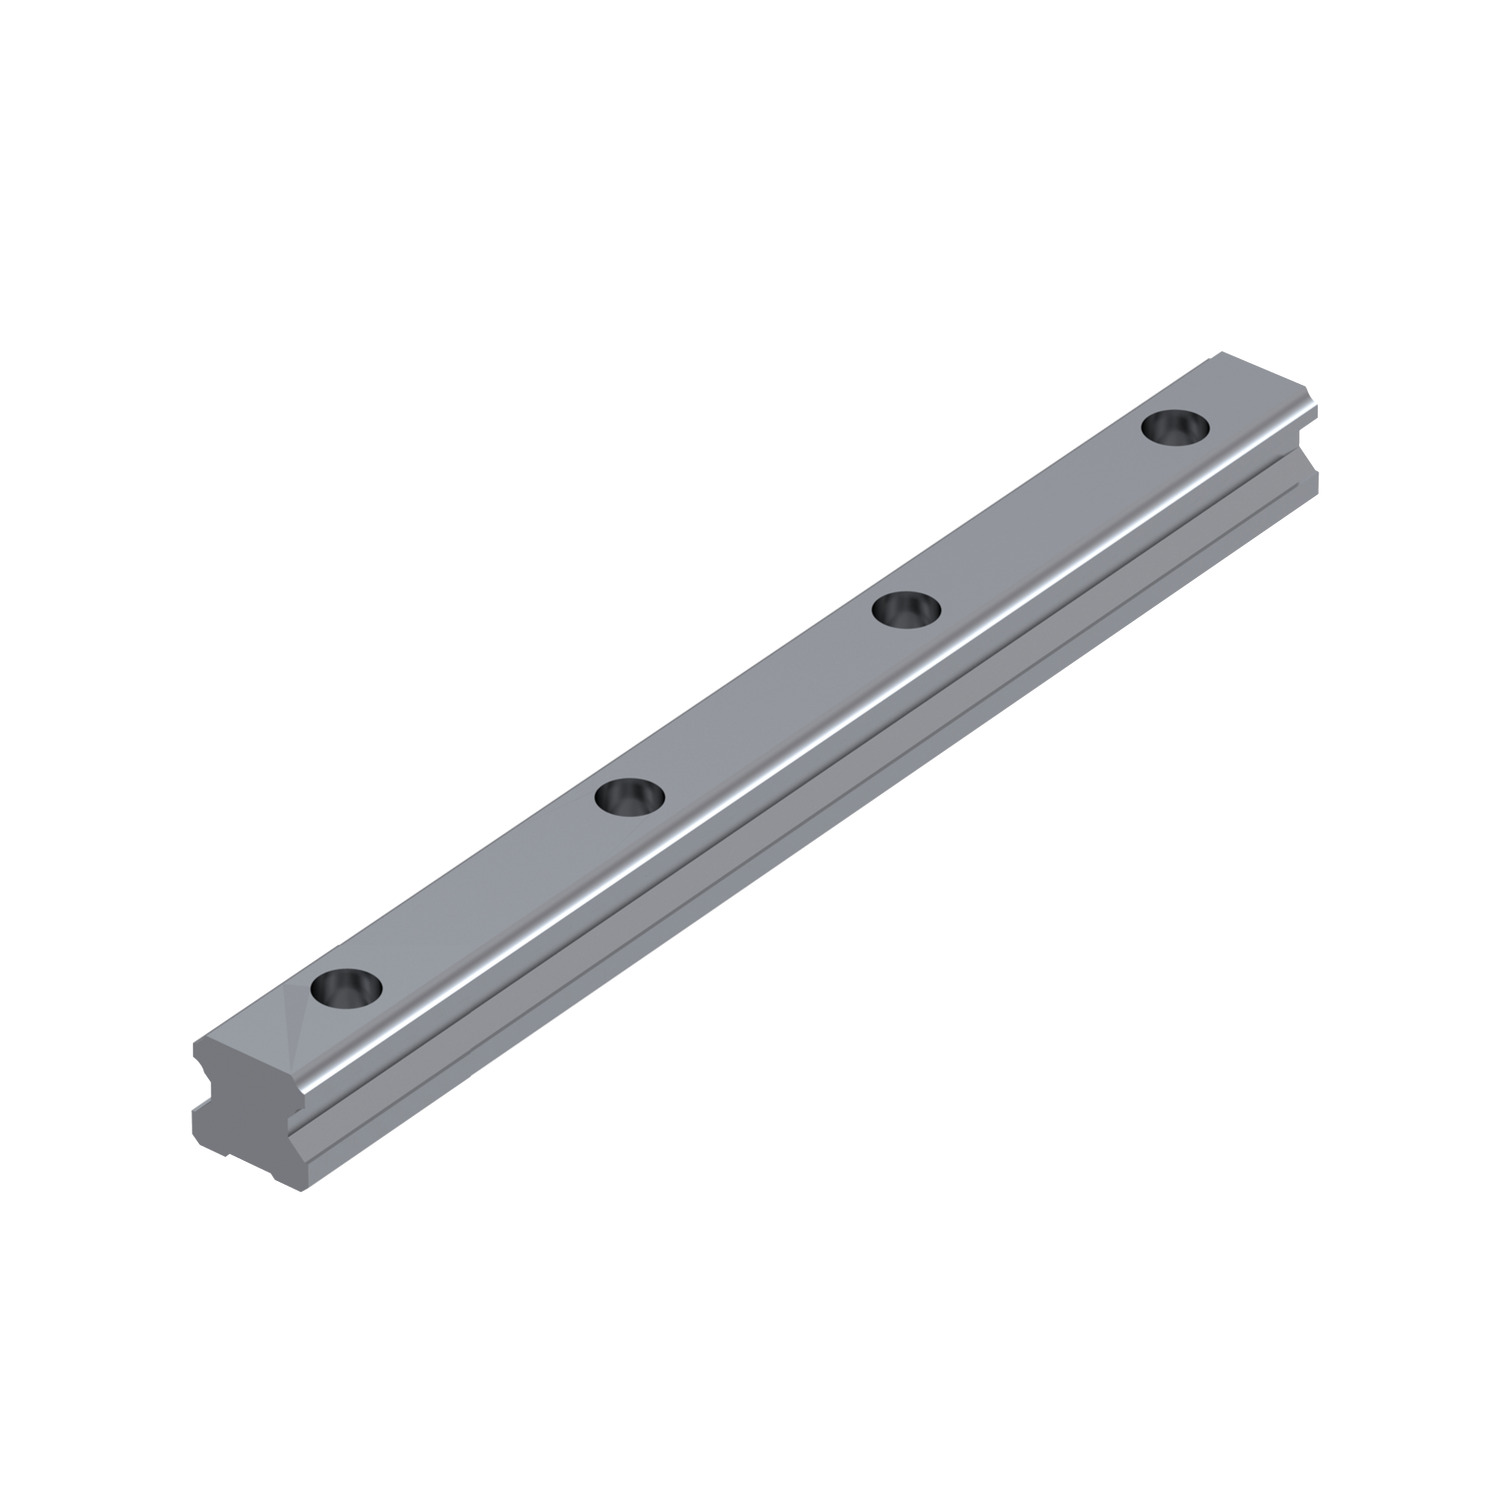 L1016.15 - 15mm Linear Guide Rail